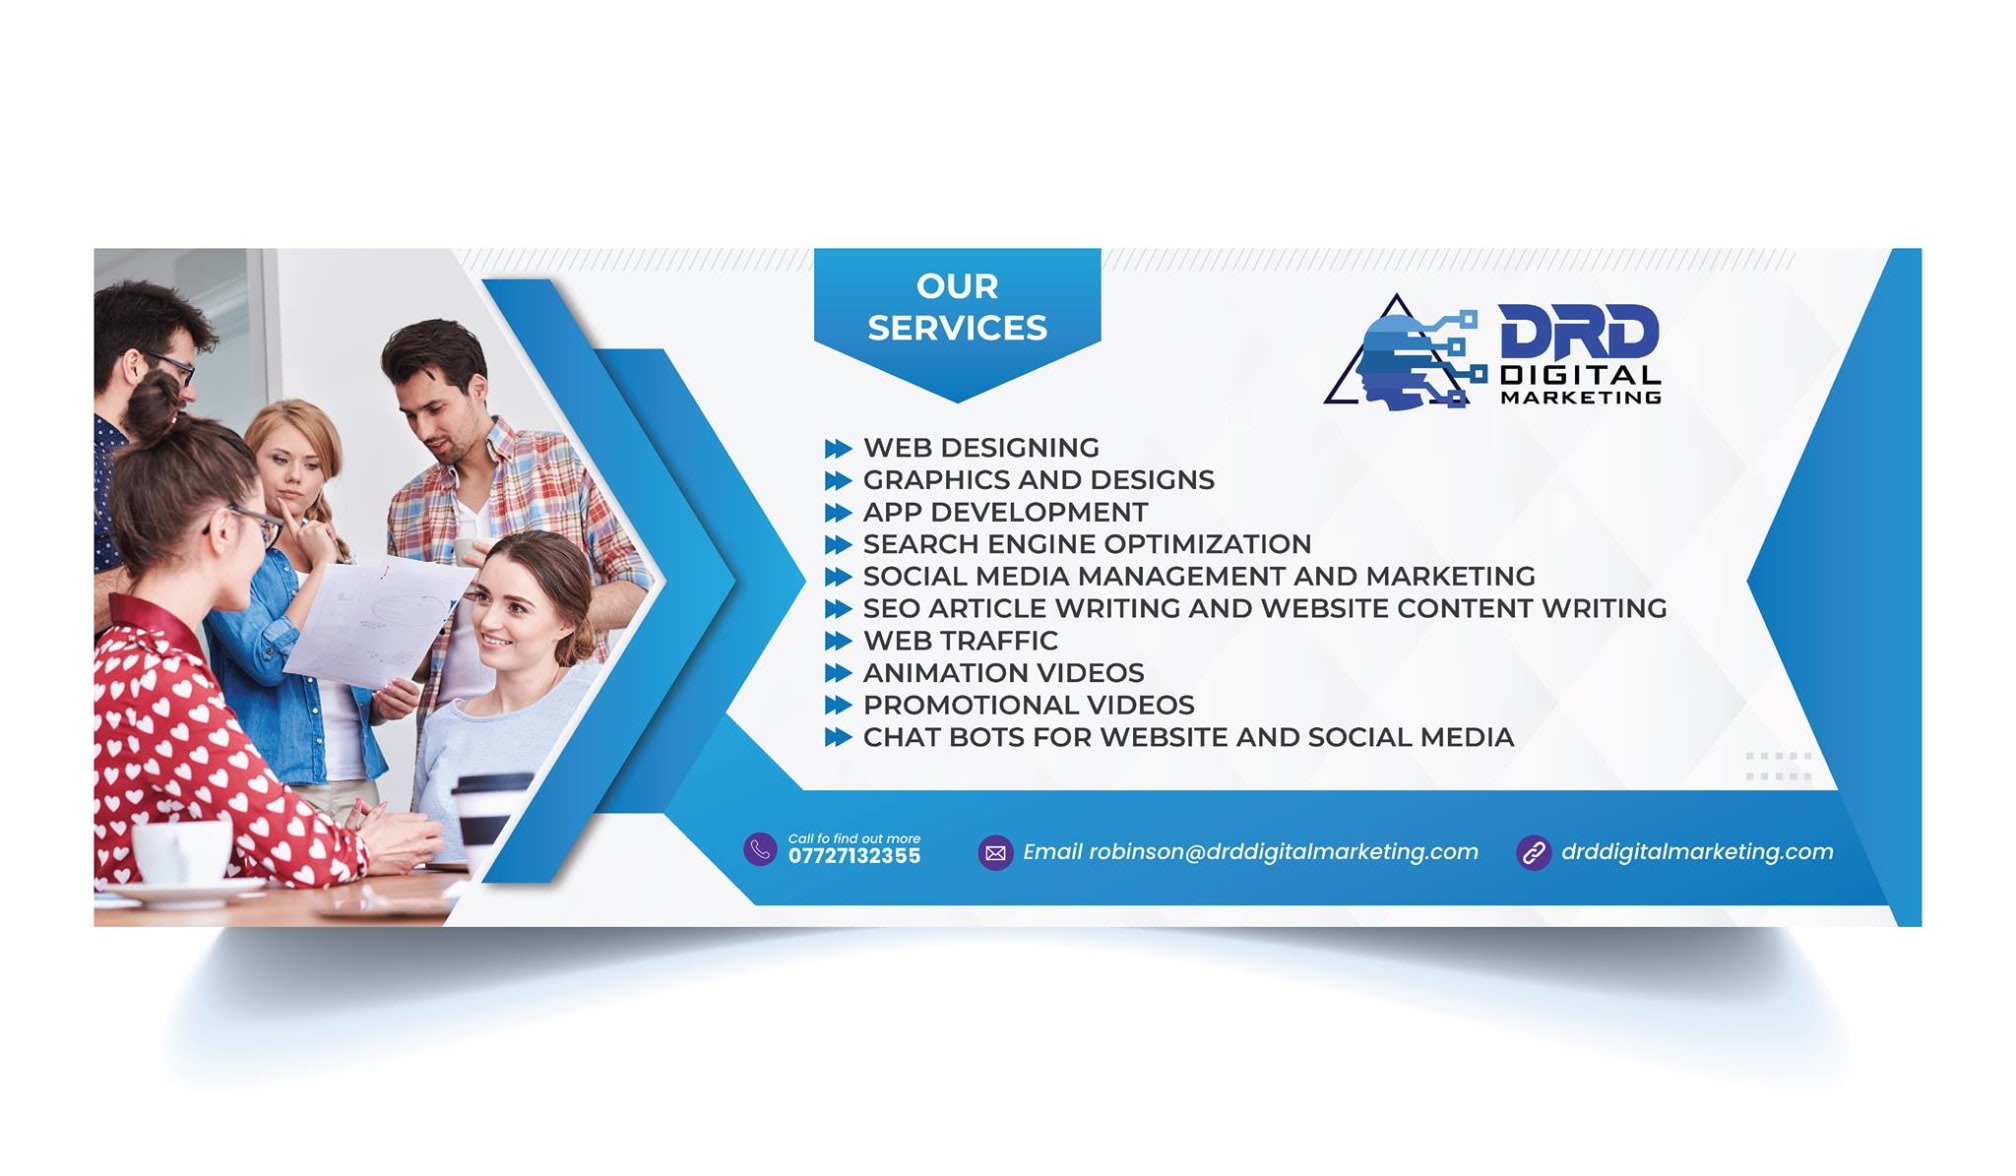 DRD Digital Marketing Ltd Dagenham 07727 132355